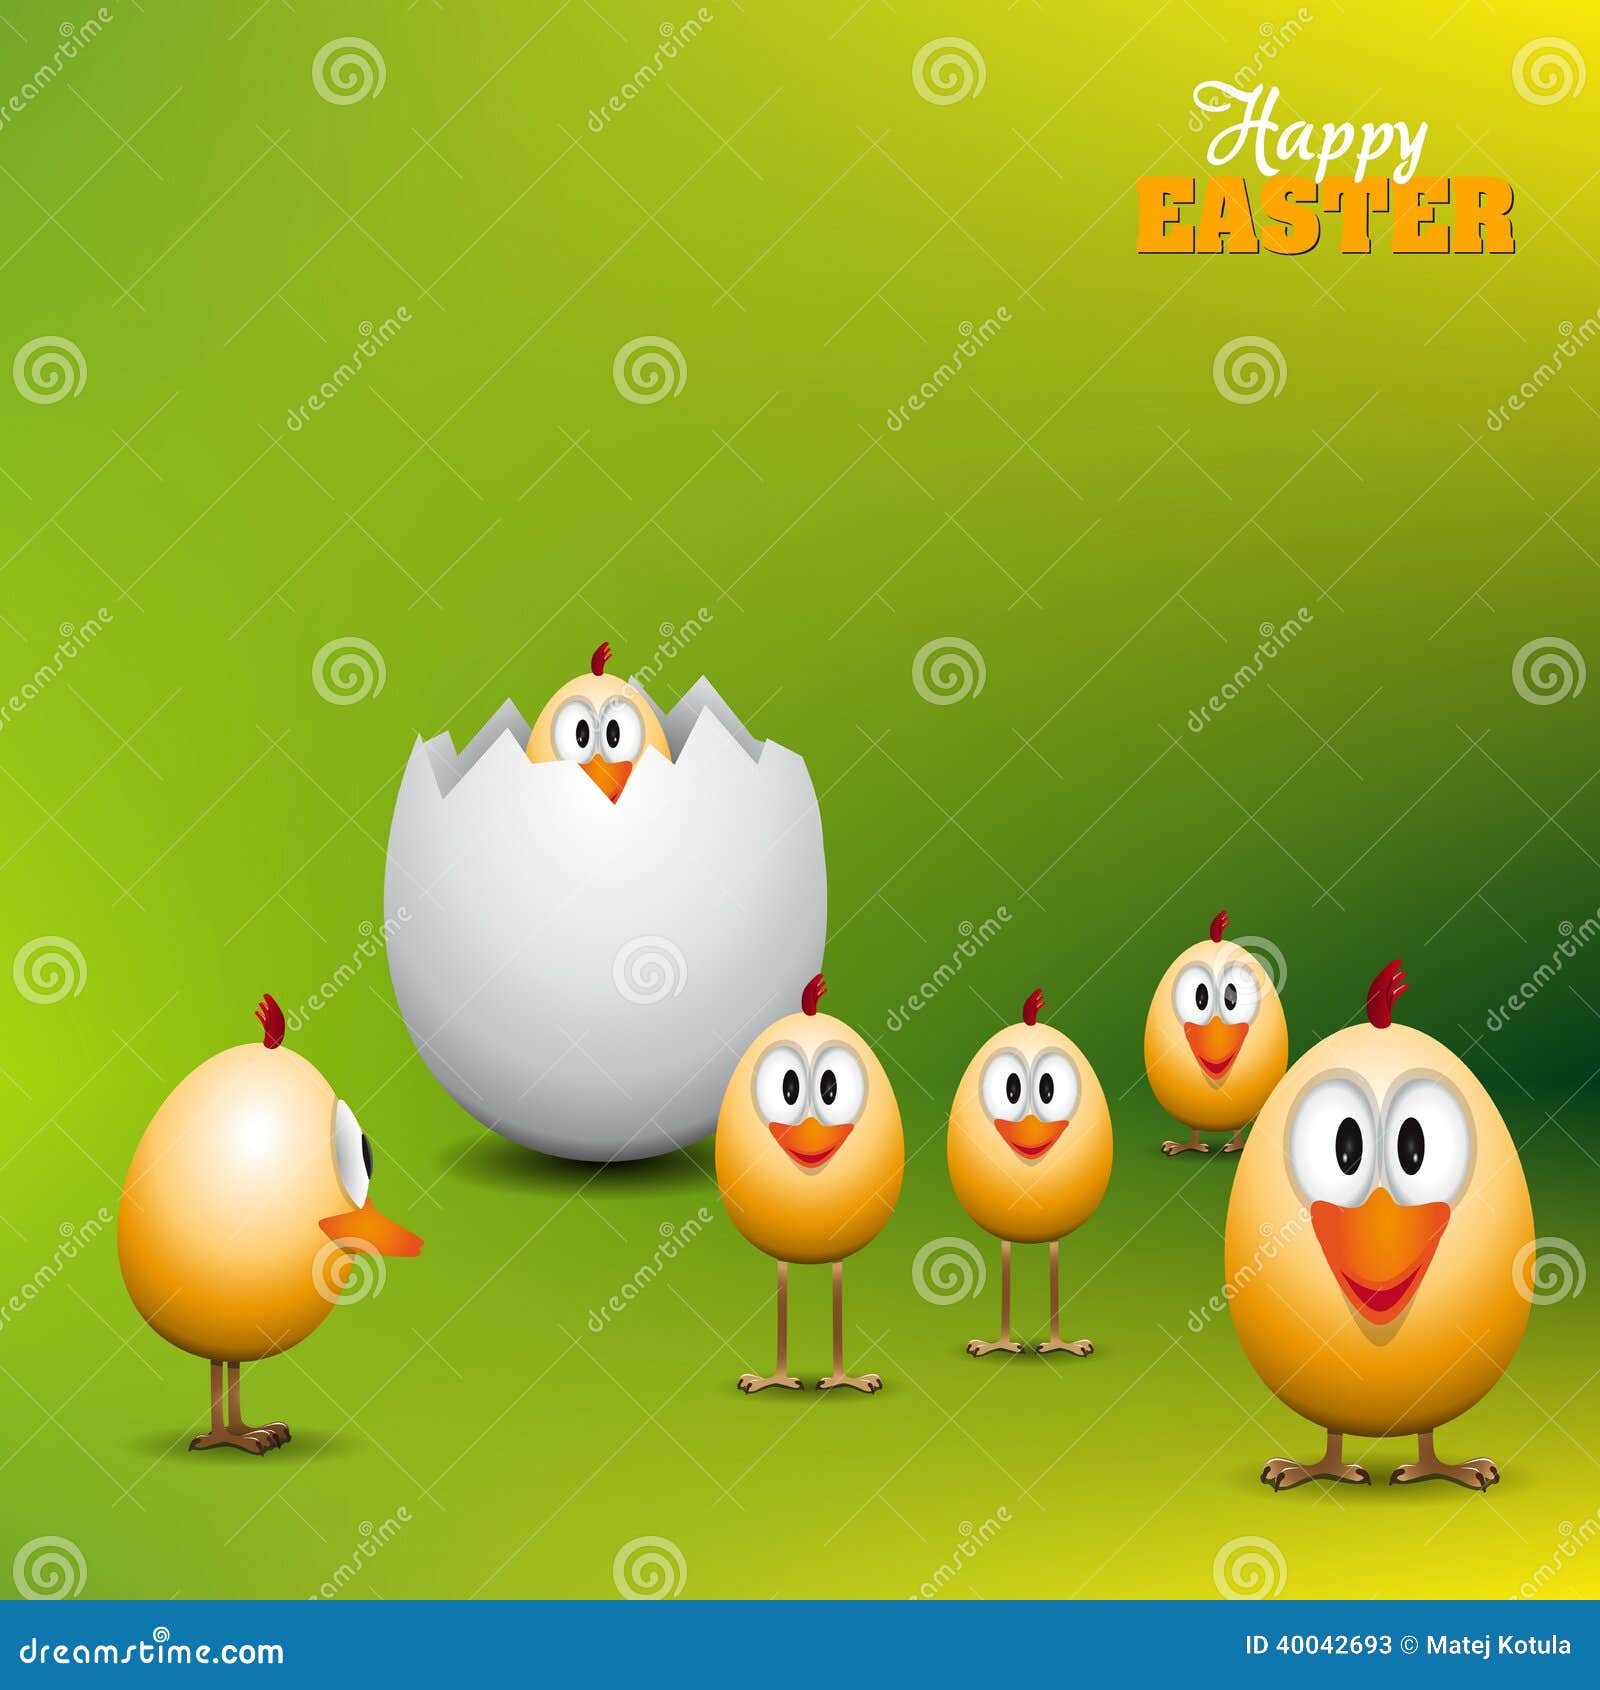 Funny Easter Eggs Chicks Background Illustration Happy Easter Card